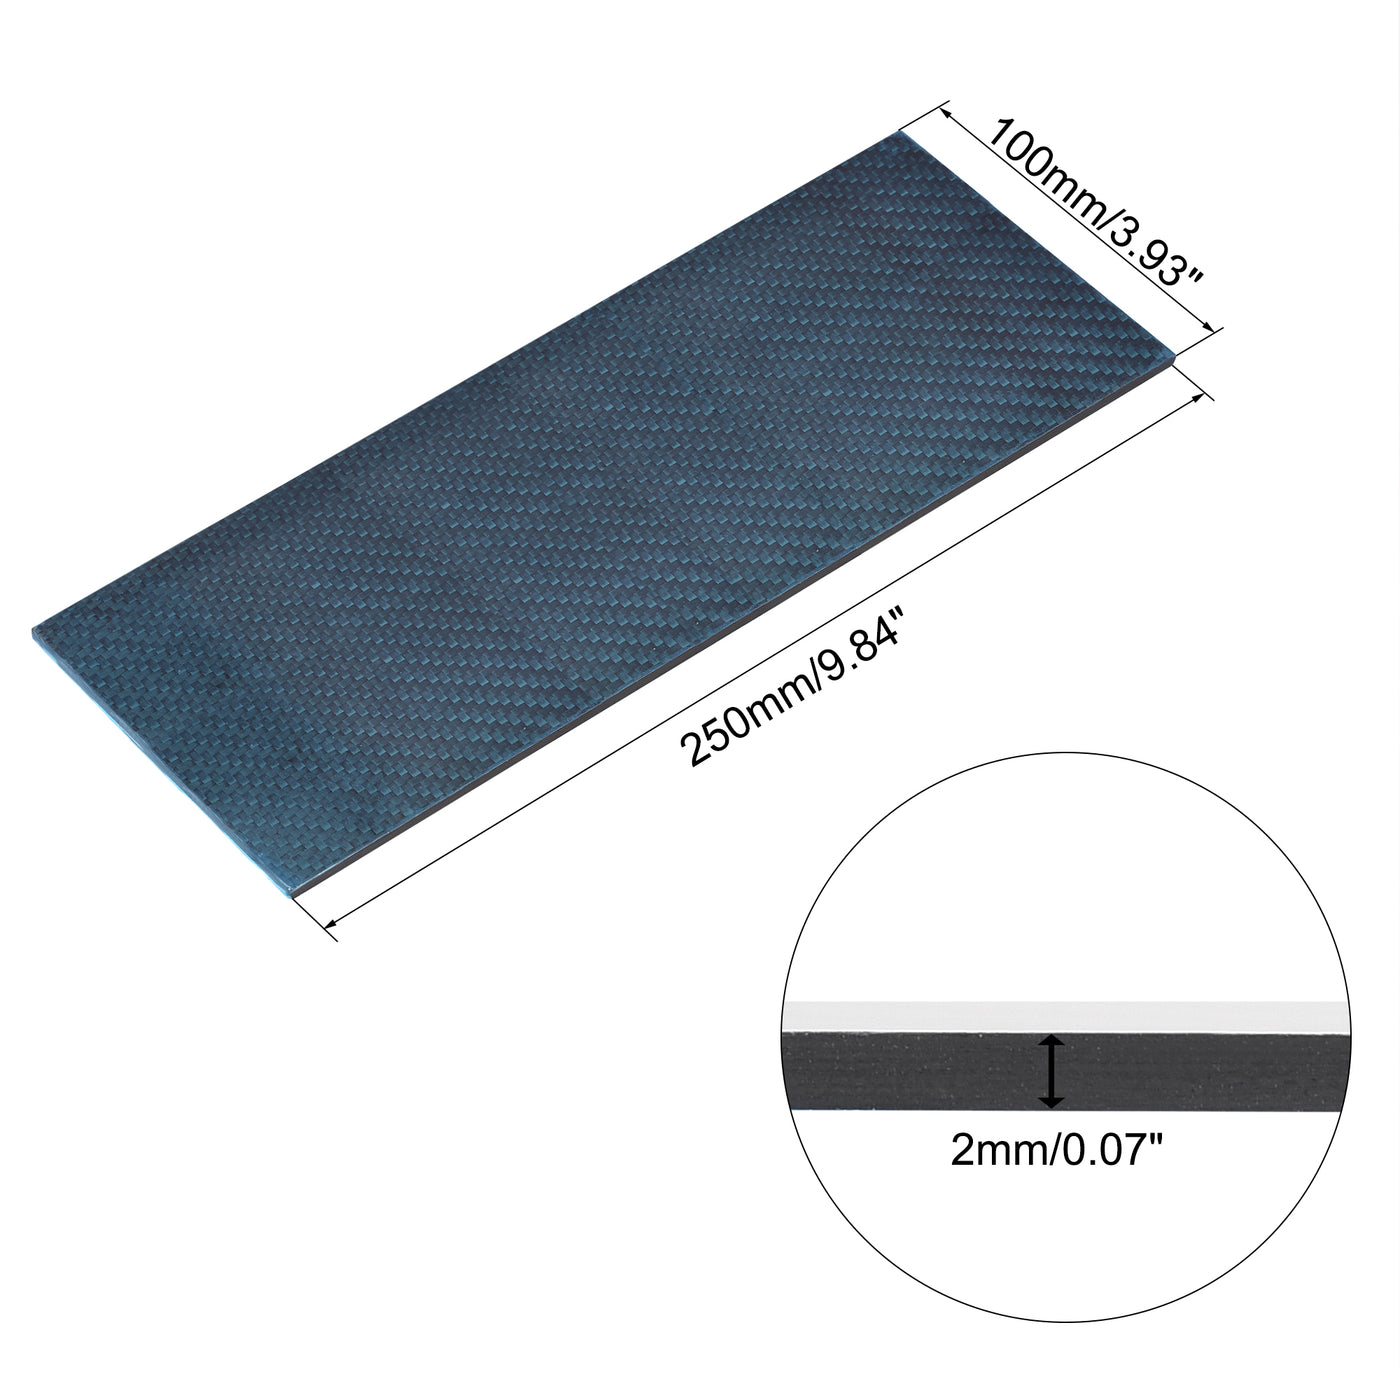 Uxcell Uxcell Carbon Fiber Plate Panel Sheets 150mm x 125mm x 3mm (Twill Matte)